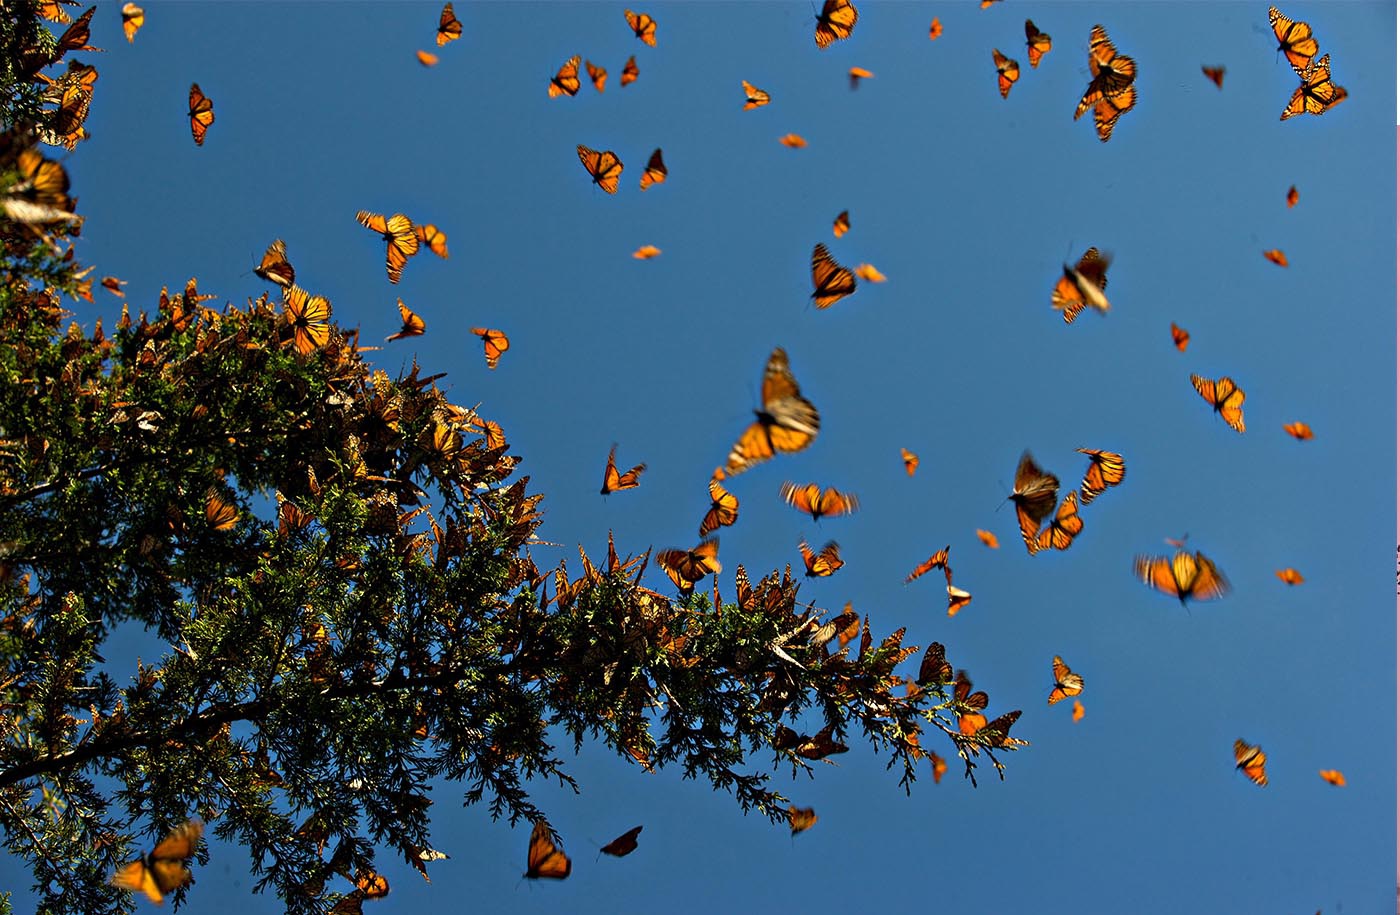 The monarch butterflies migration